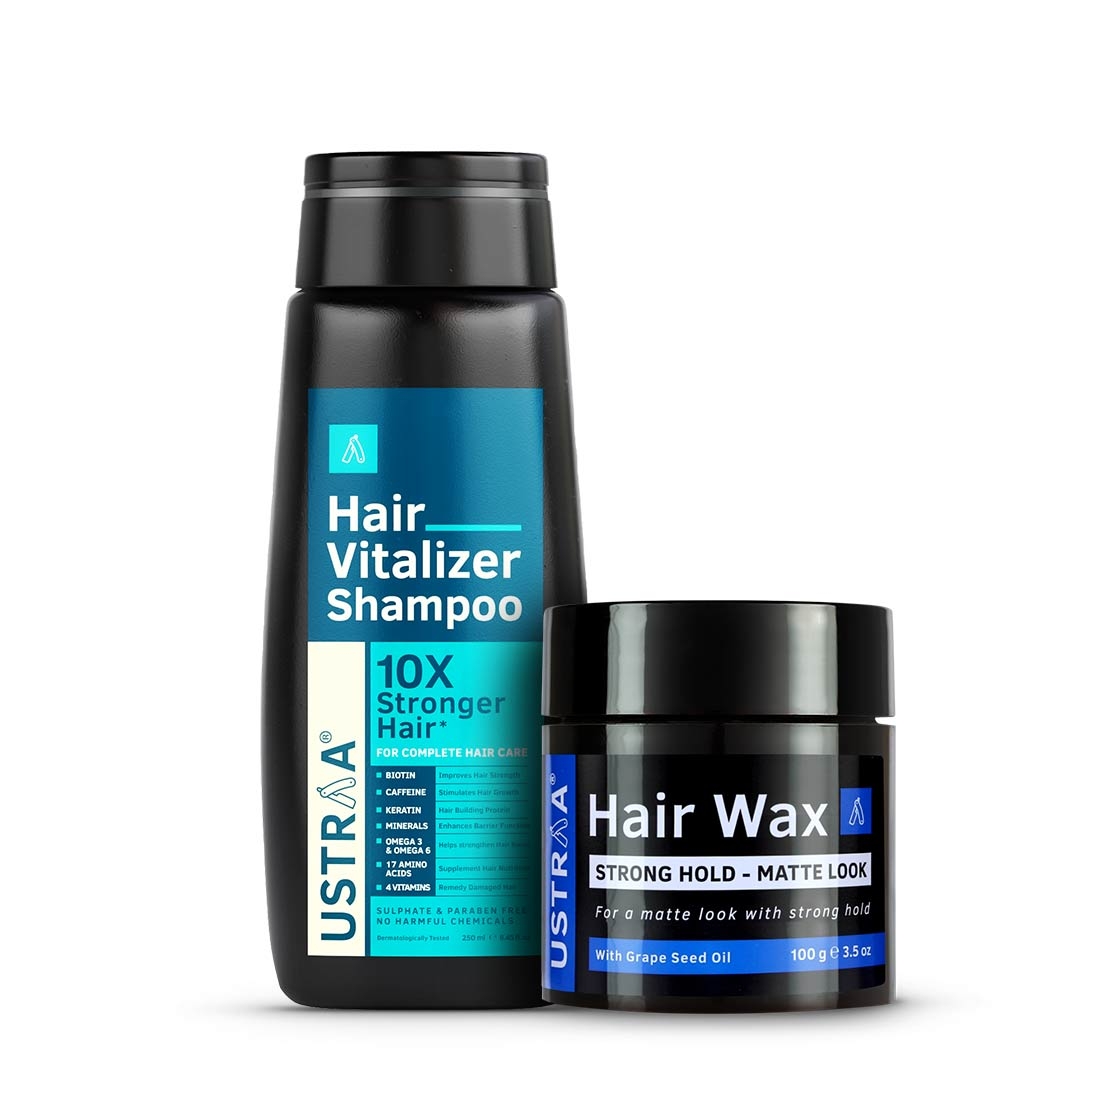 Ustraa | Ustraa Hair Vitalizer Shampoo - 250ml & Hair Wax - Strong Hold, Matte Look - 100g 
